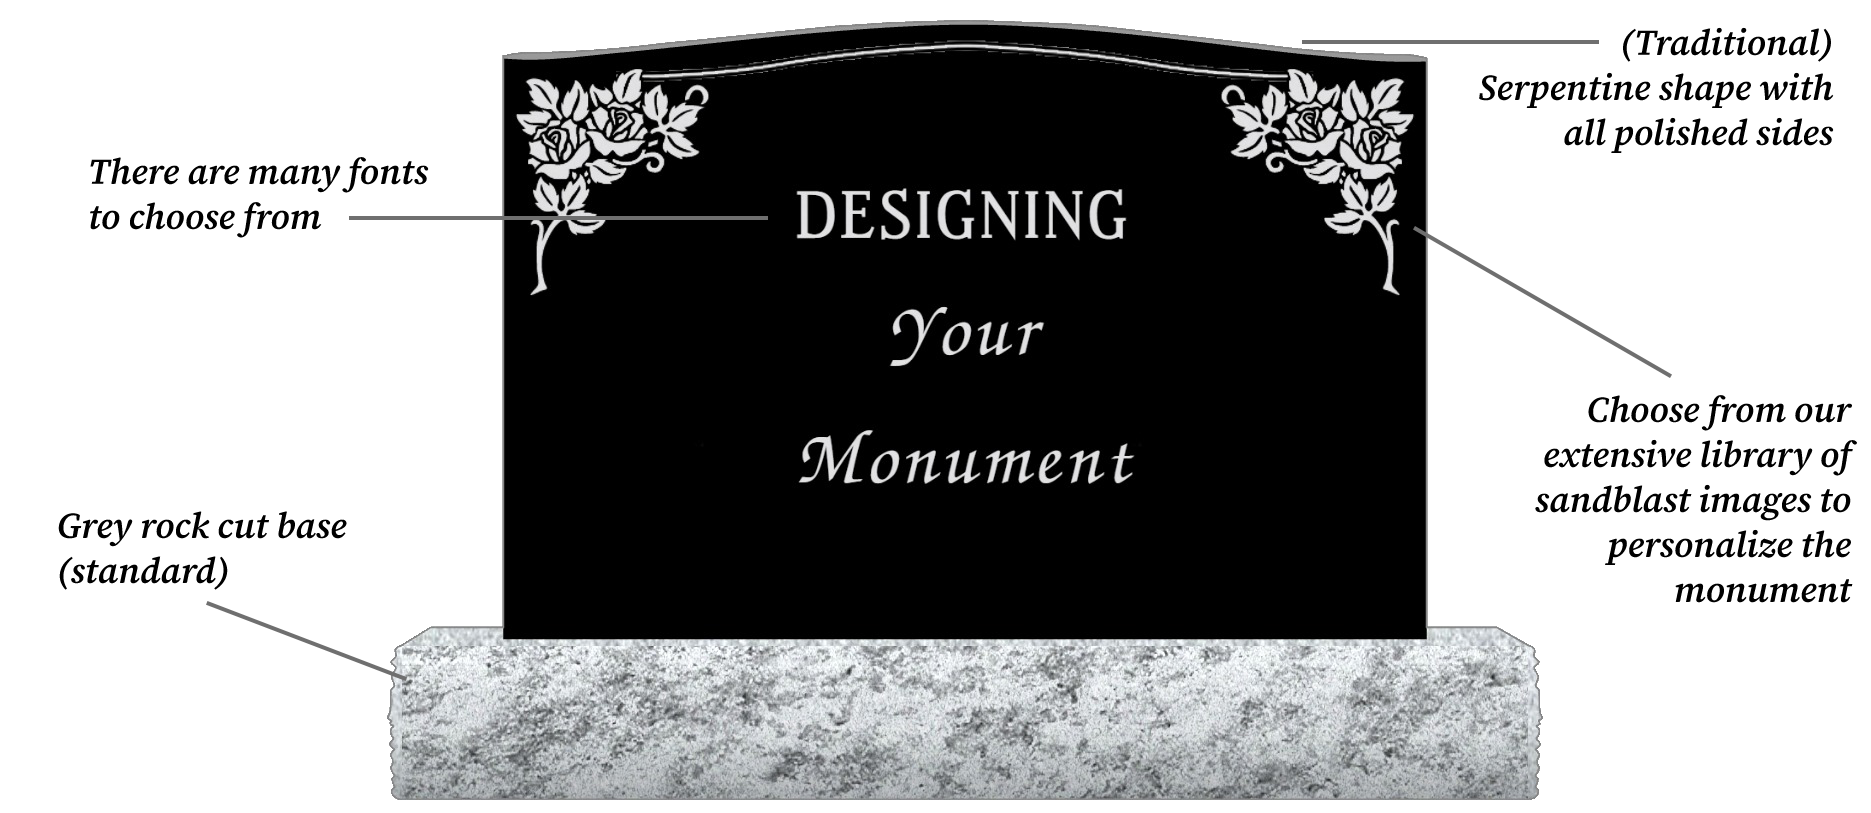 Designing Your Monument